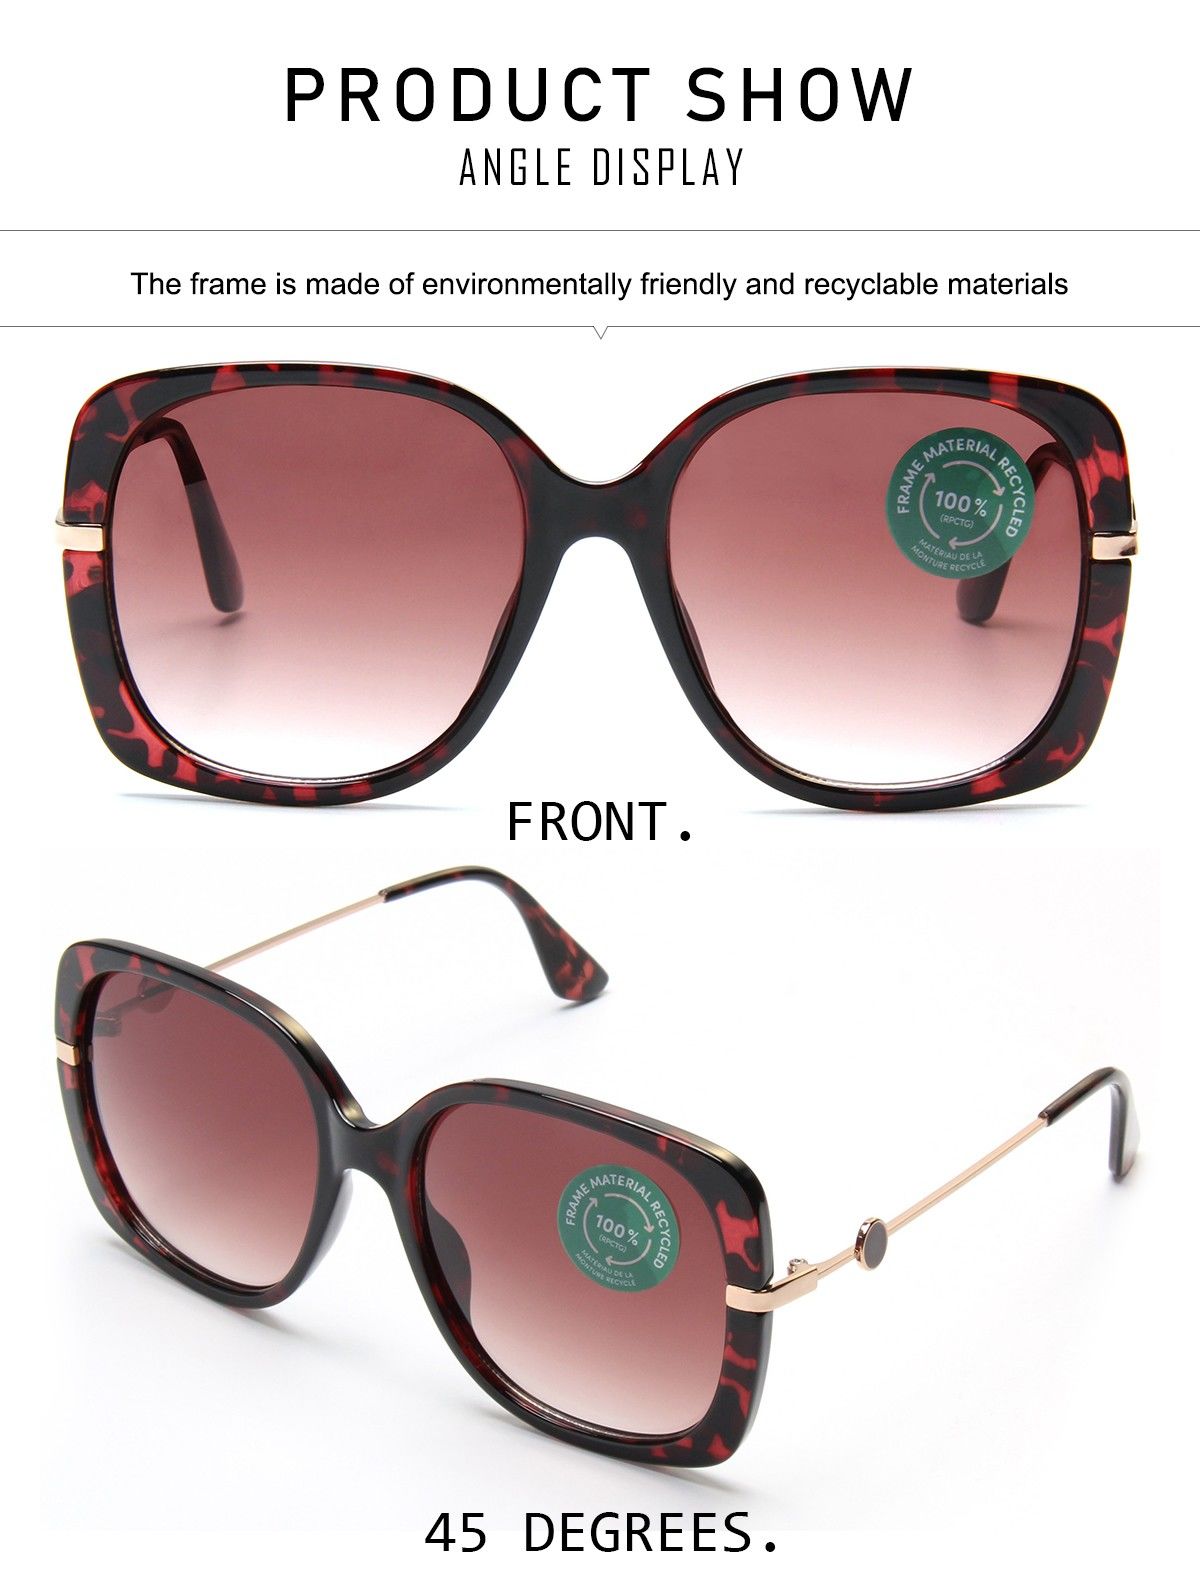 low-cost environmentally friendly sunglasses marketing bulk buy